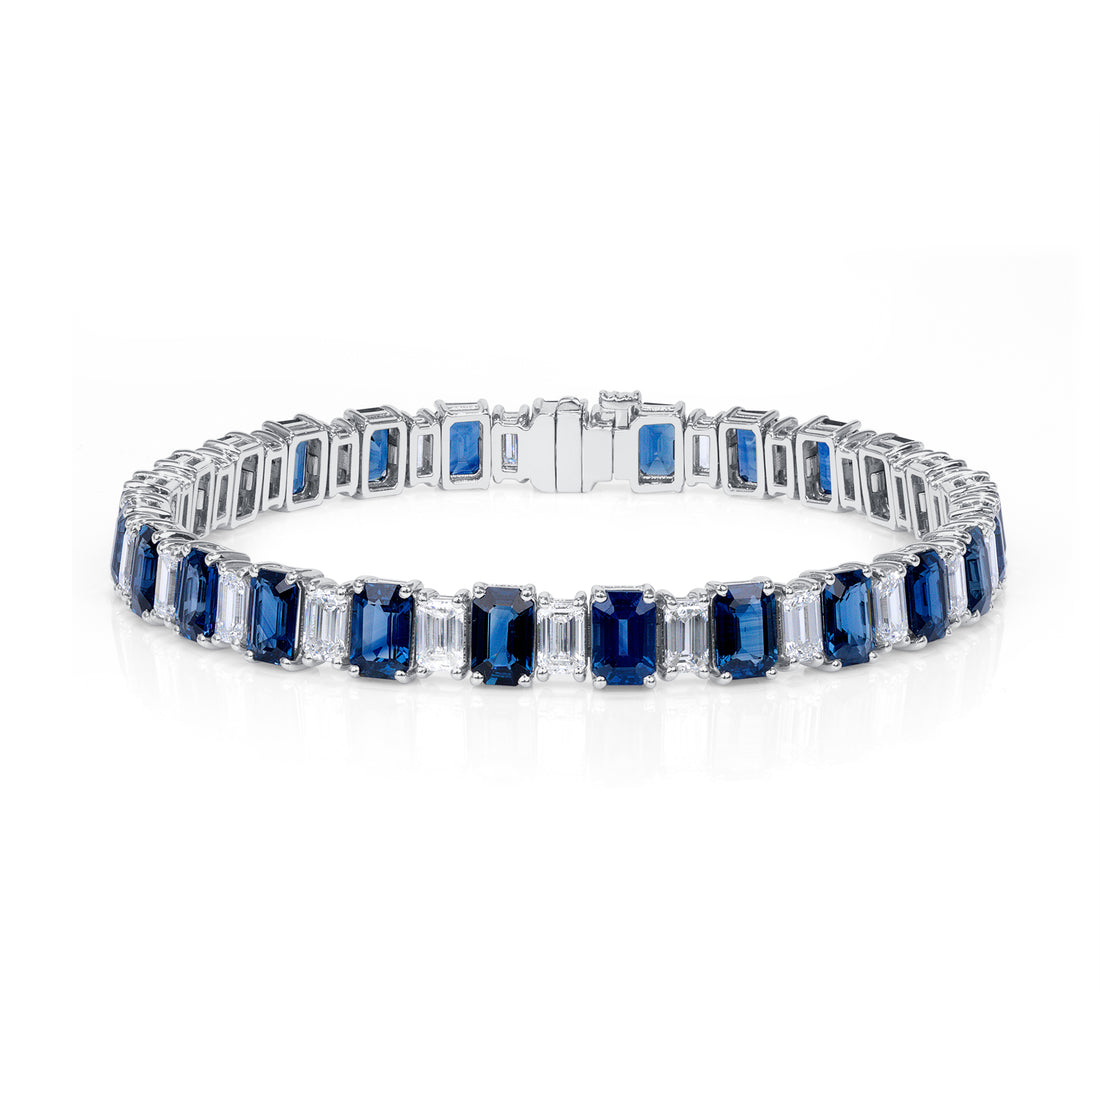 20.26 CT. Alternating Emerald Cut Blue Sapphire and Emerald Cut Diamond Tennis Bracelet in 14K White Gold